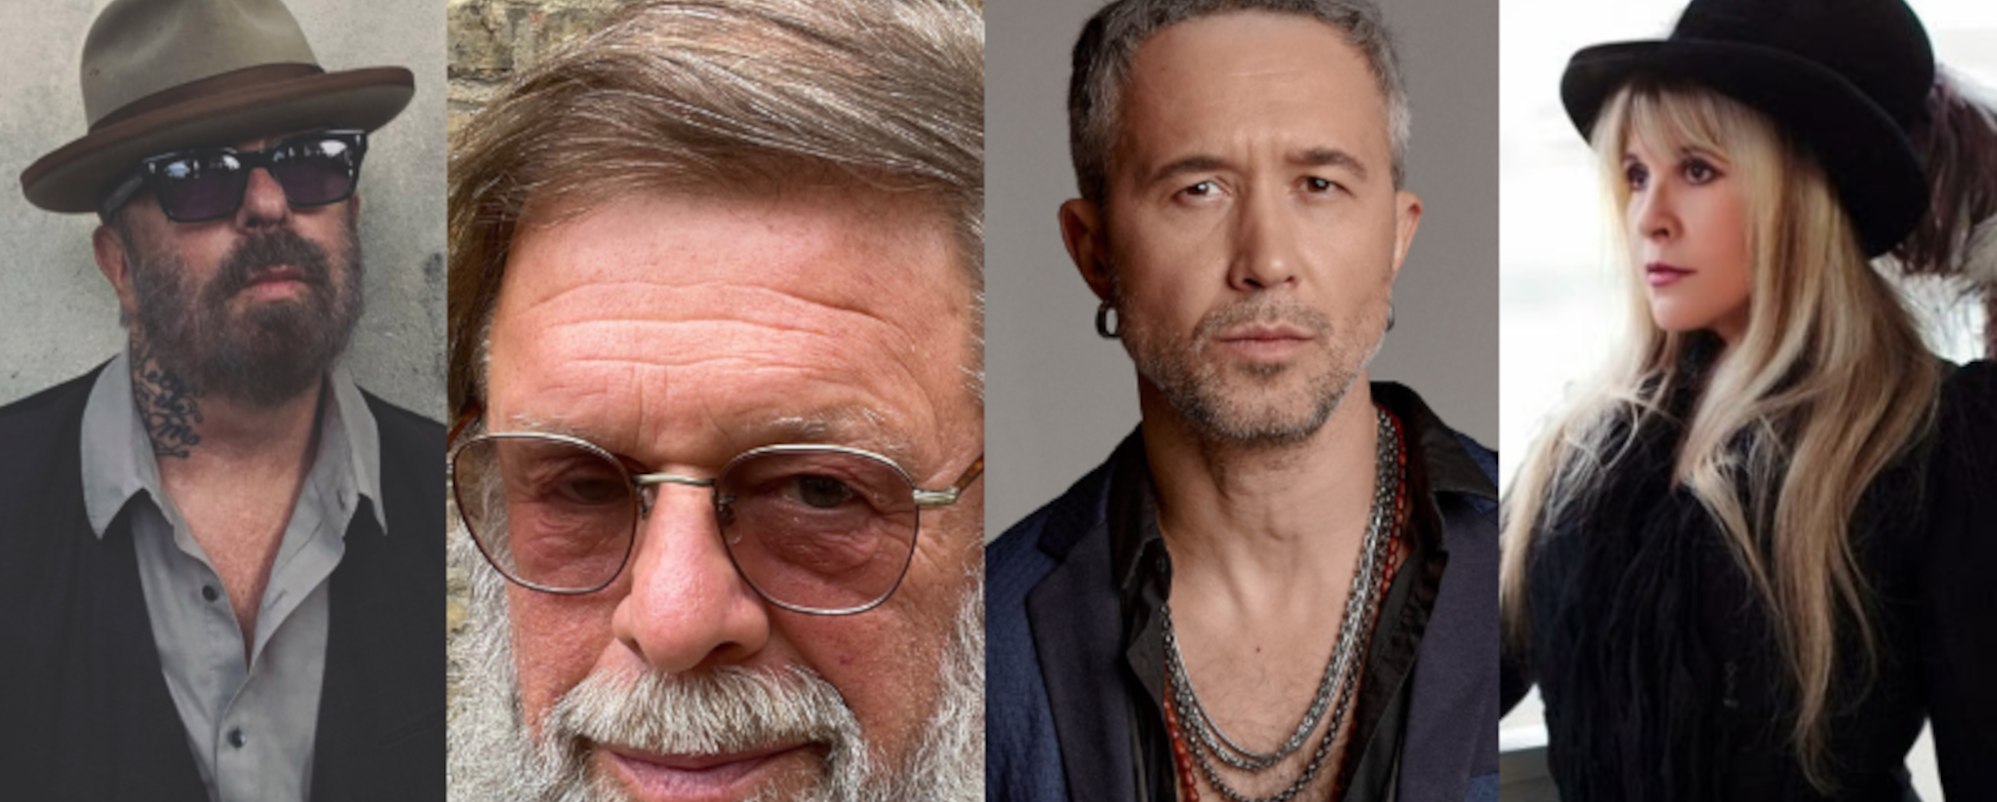 Dave Stewart, Stevie Nicks, Boris Grebenshchikov, and Serhii Babkin Release “Face To Face” for Ukraine